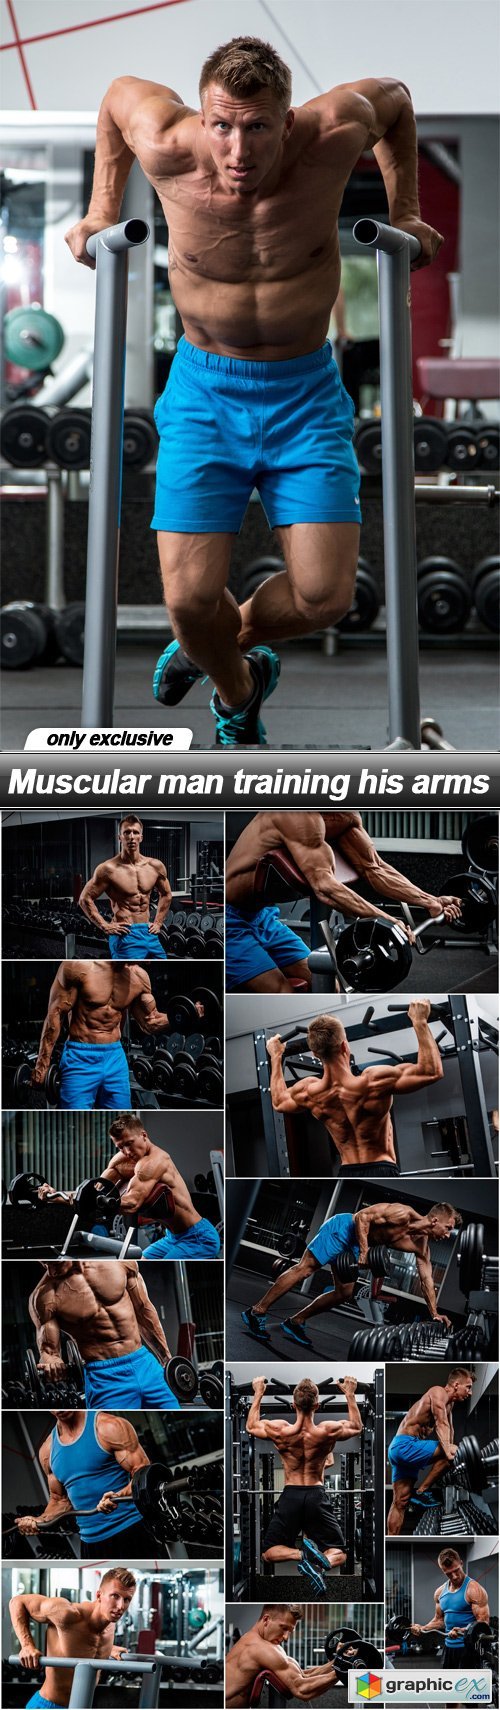 Muscular man training his arms - 14 UHQ JPEG